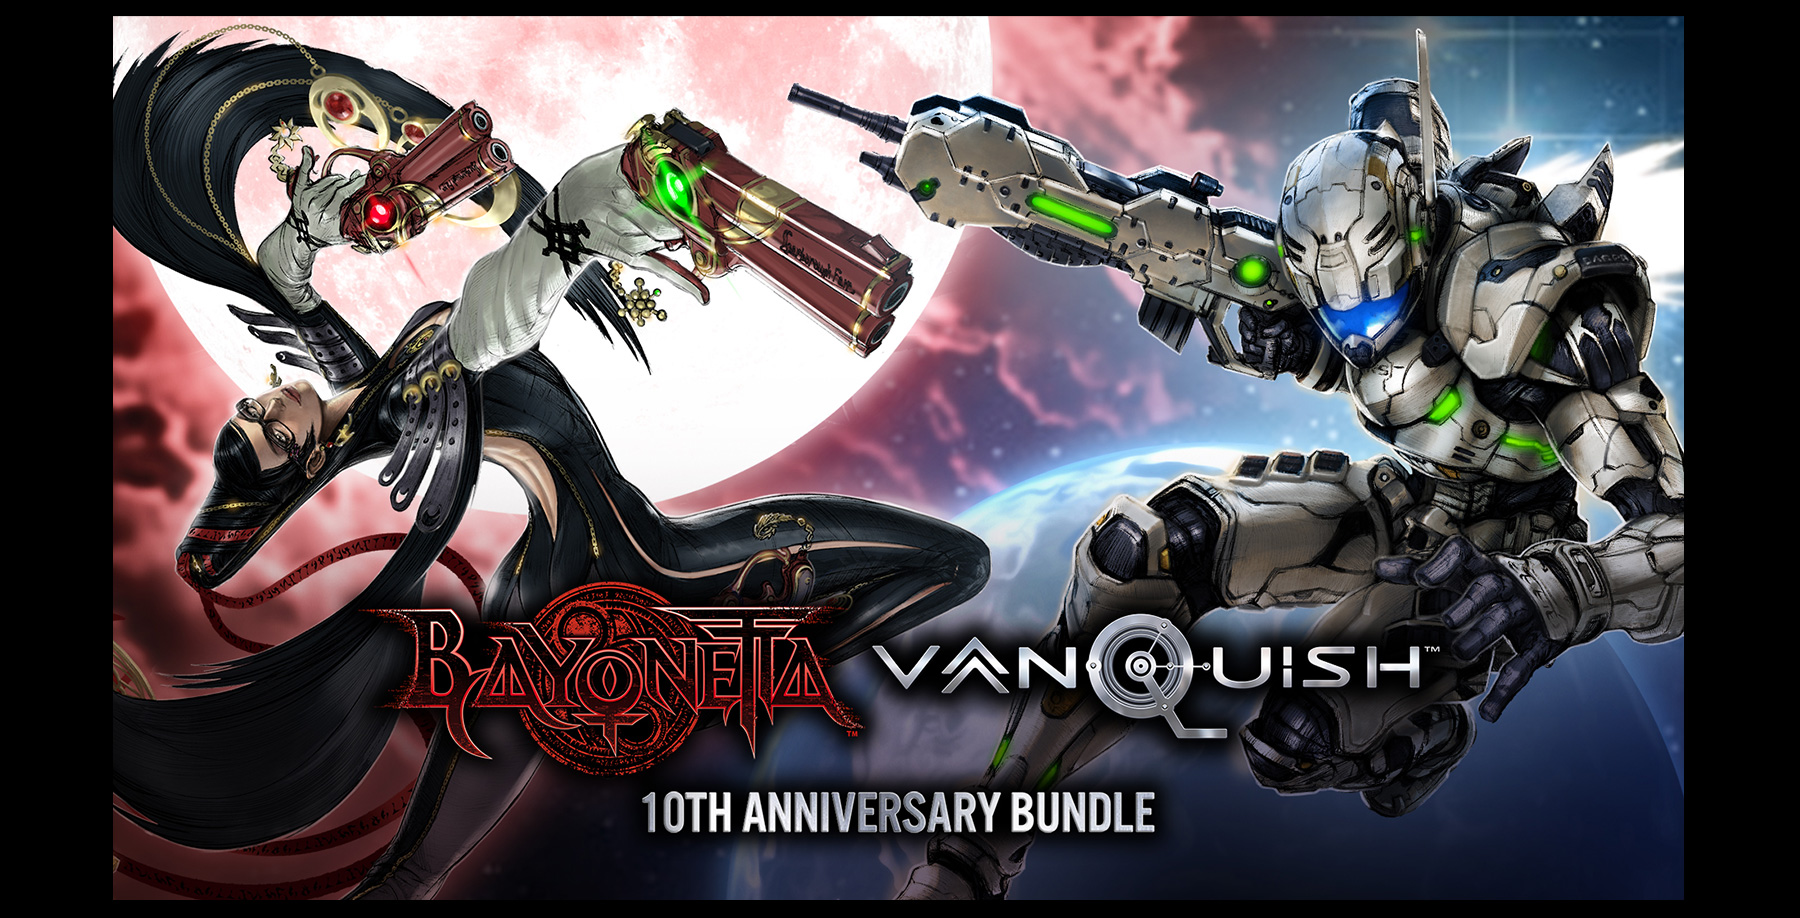 Bayonetta & Vanquish 10th Anniversary Bundle, Announcement Trailer